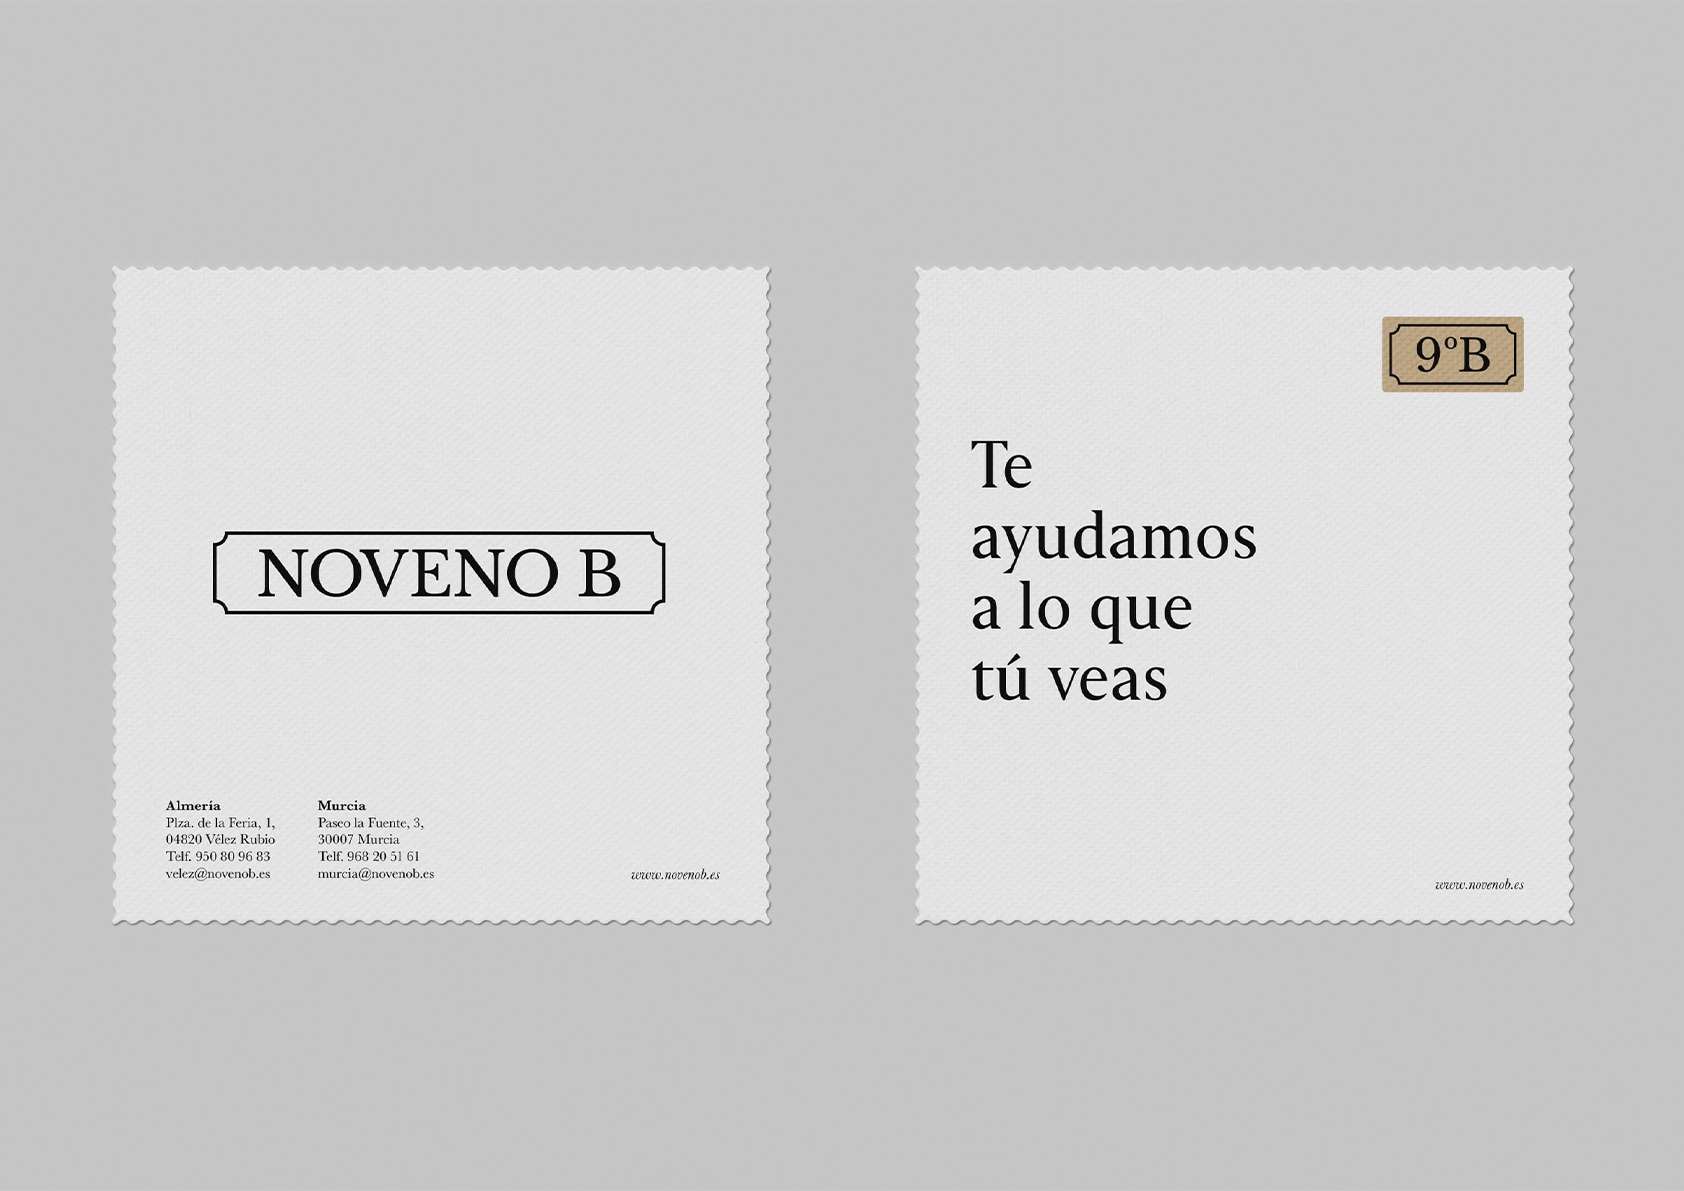 Noveno B by Buas - Creative Work